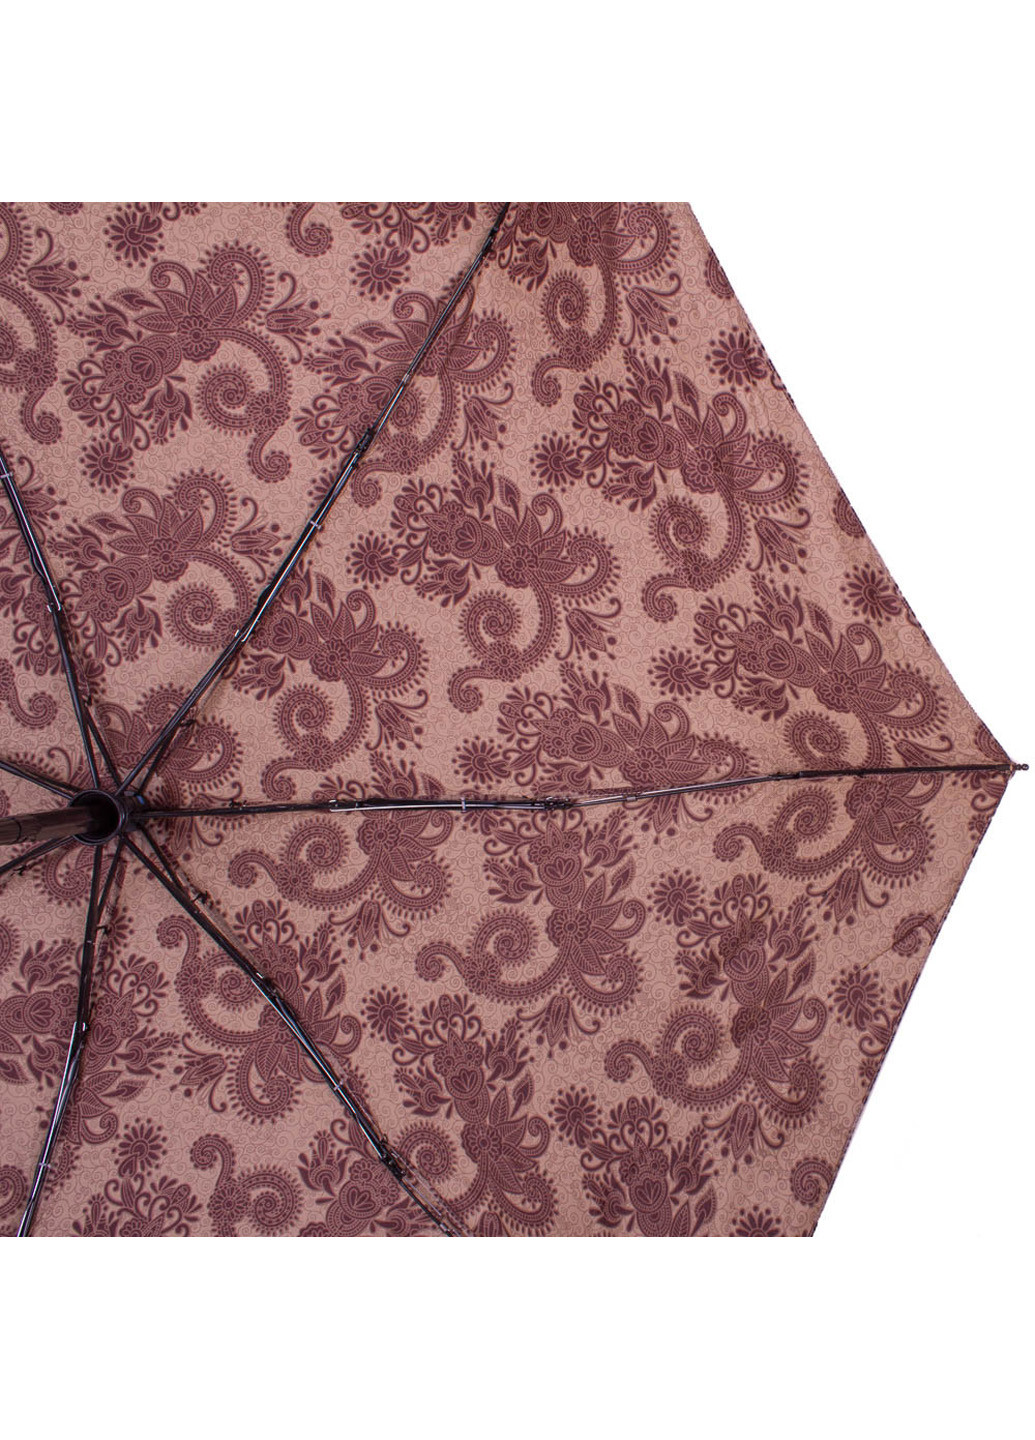 Жіночий складаний парасолька повний автомат 93 см Airton (194317946)